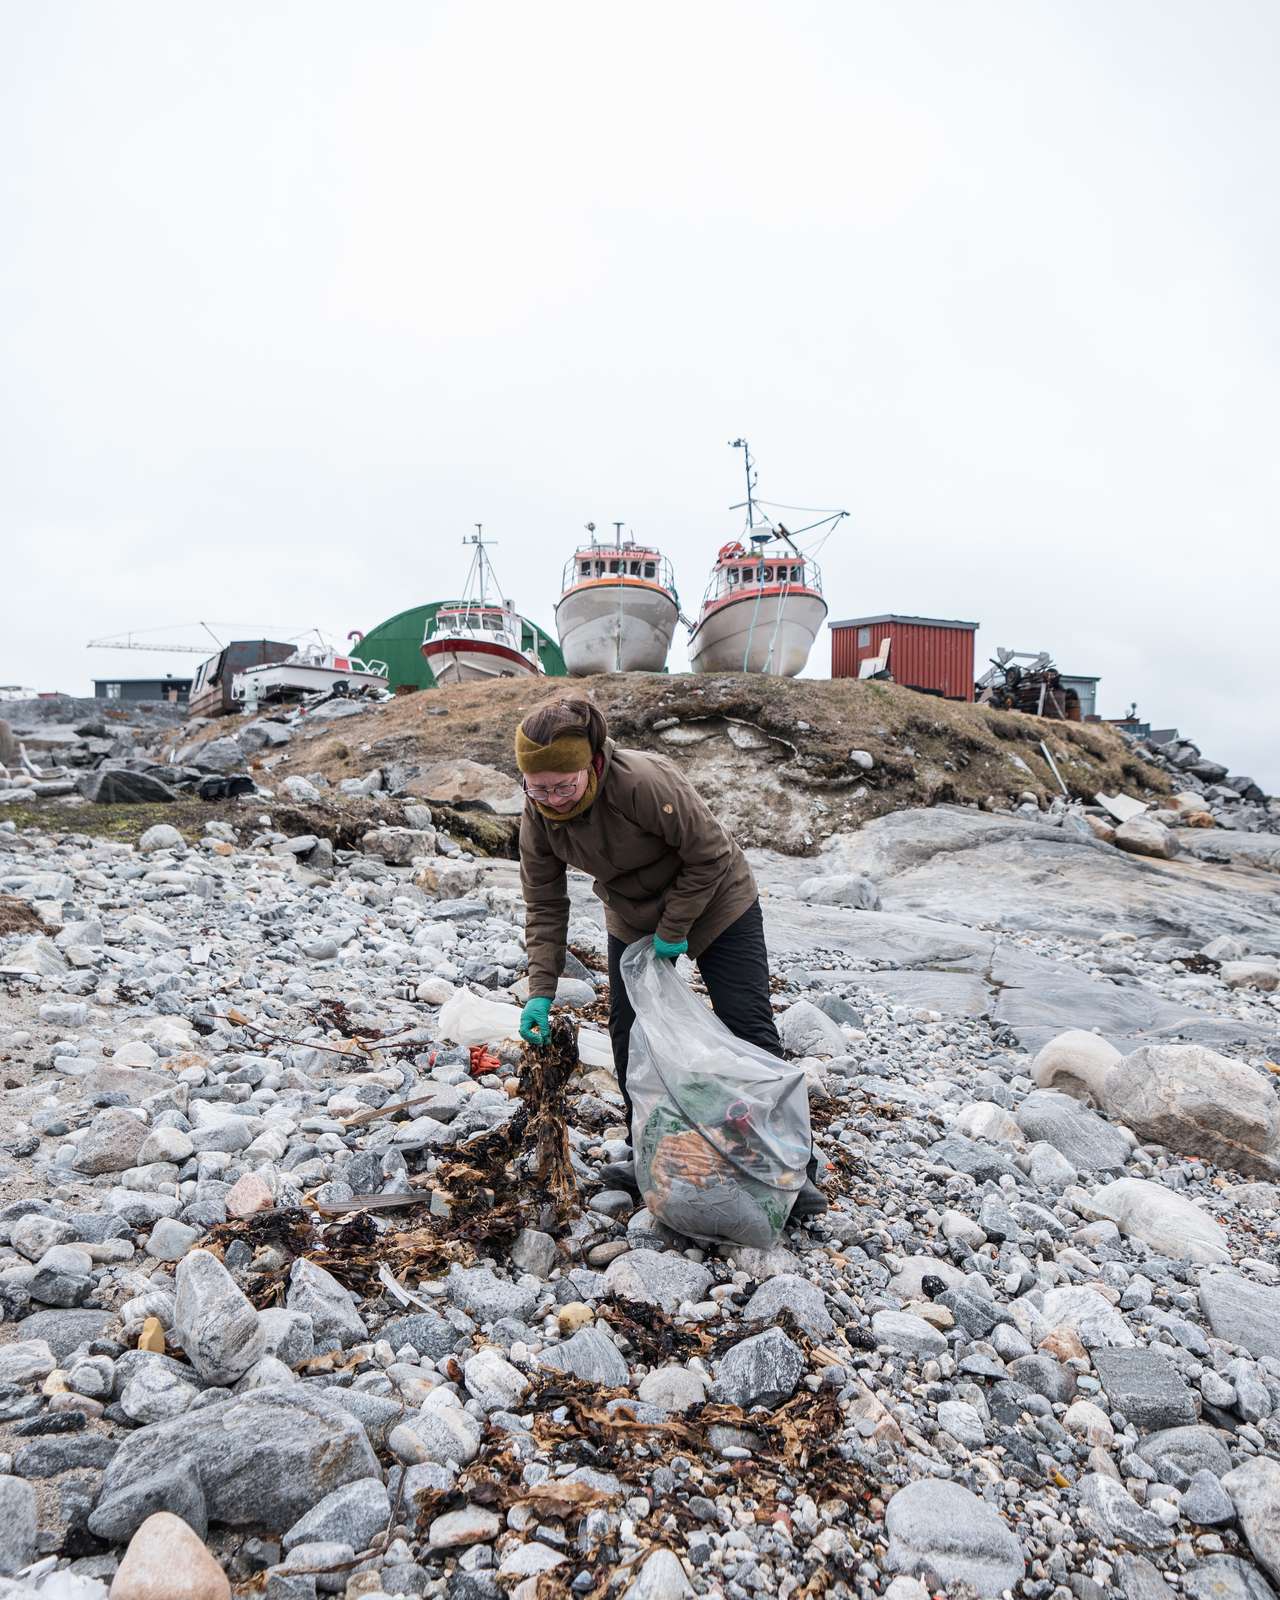 Trash on the beach, Nuuk